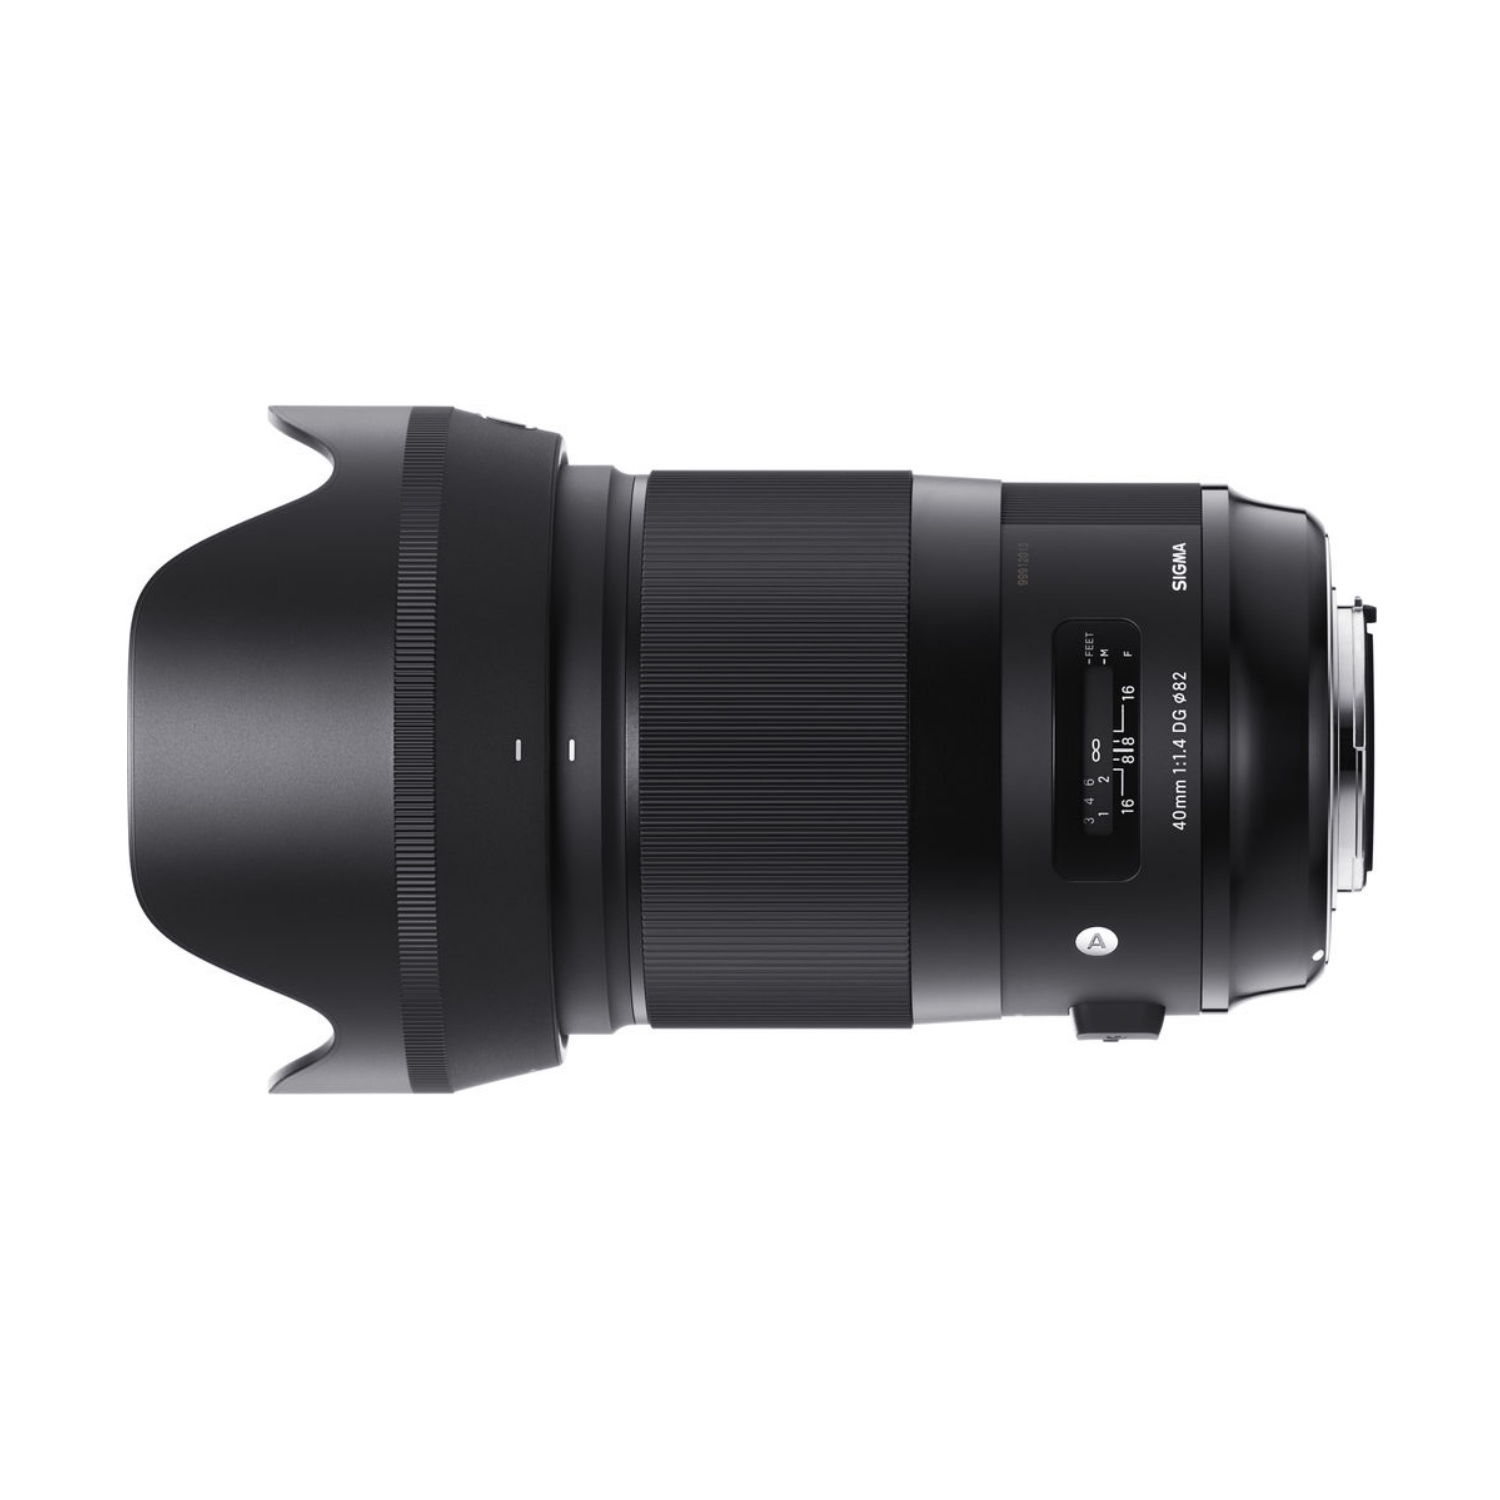 Sigma 40mm f/1.4 DG HSM Art Lens for Nikon